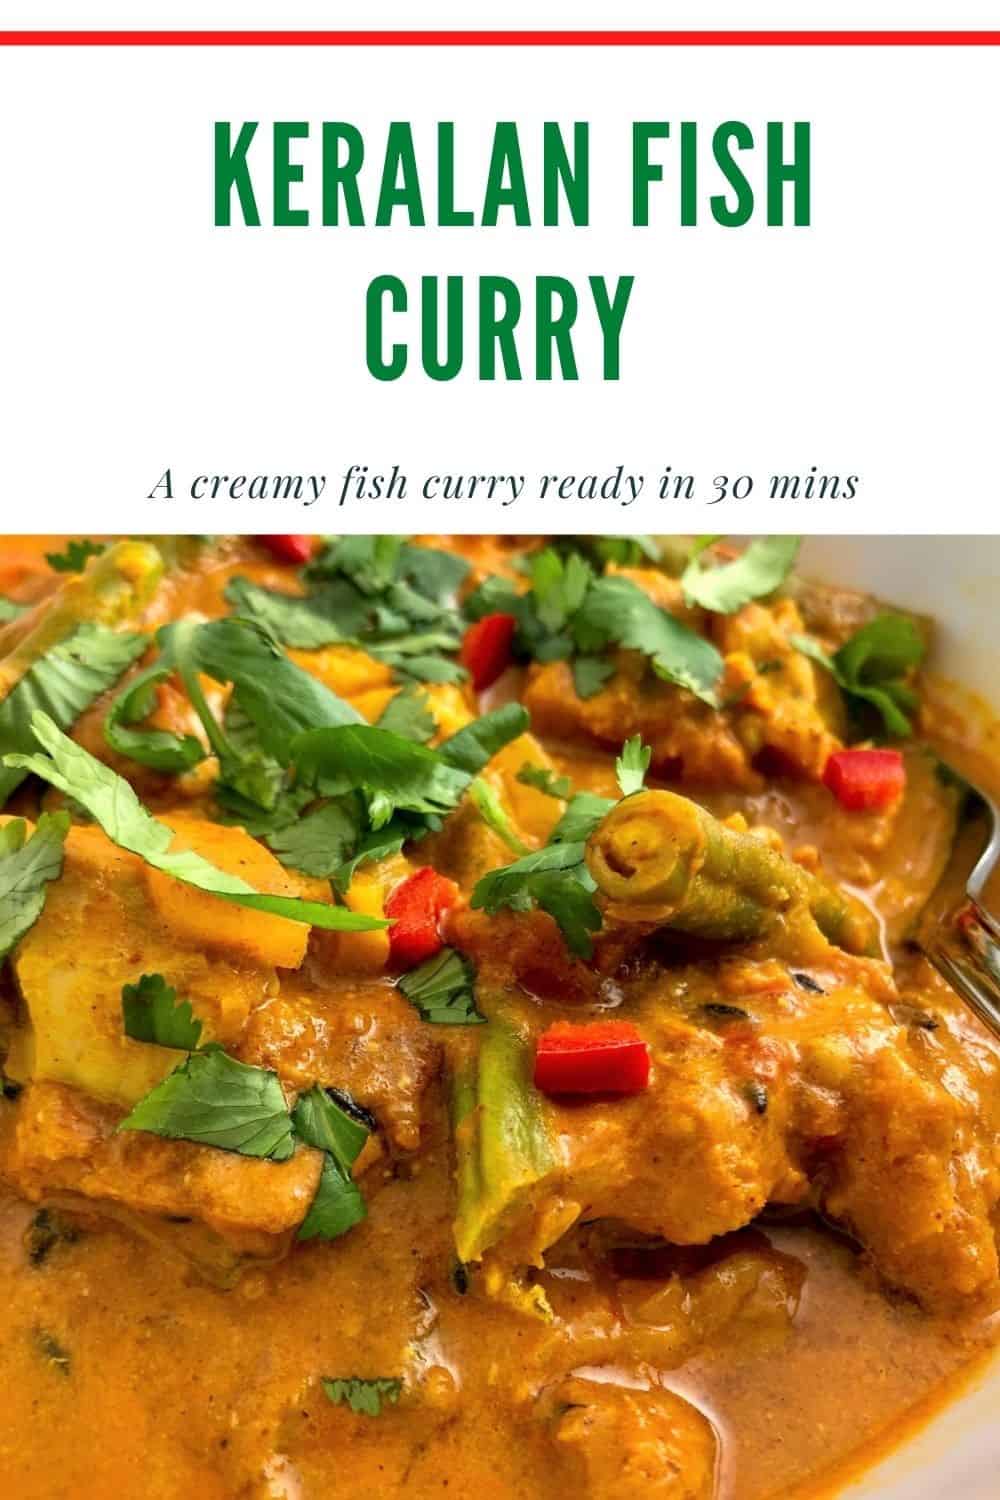 Keralan Fish Curry Pinterest image, close up of curry